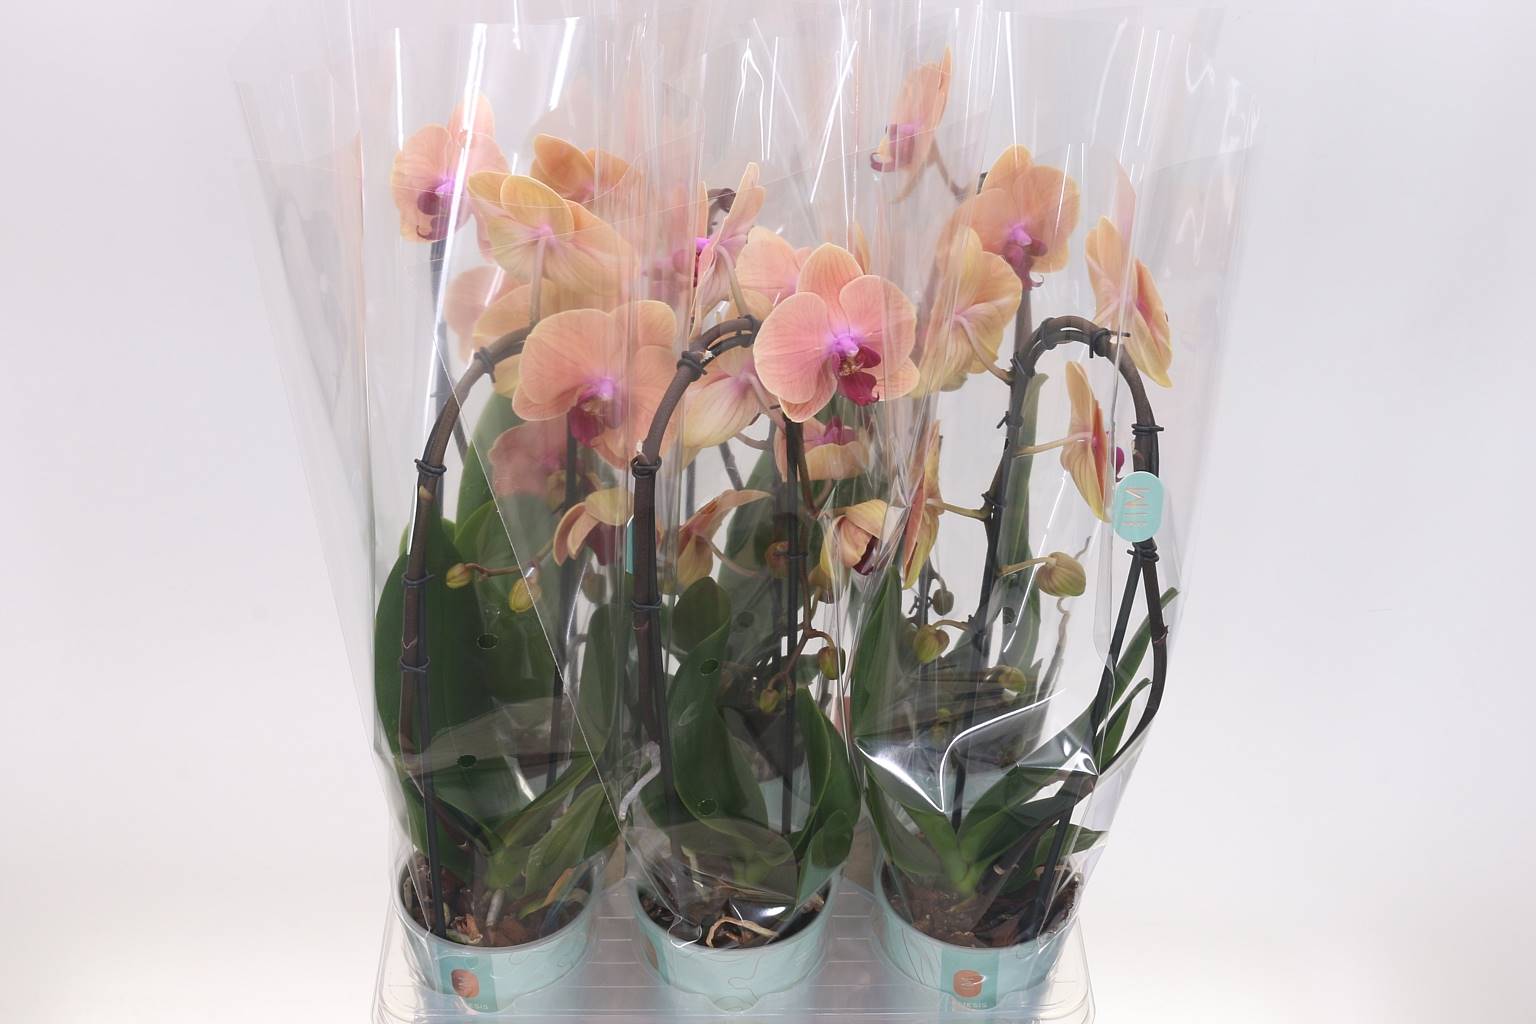 Цветок фаленопсиса Carrbean Dream 1 голос ( Phalaenopsis Flow Carrbean Dream 1 stem ) W 12 см H 45 с